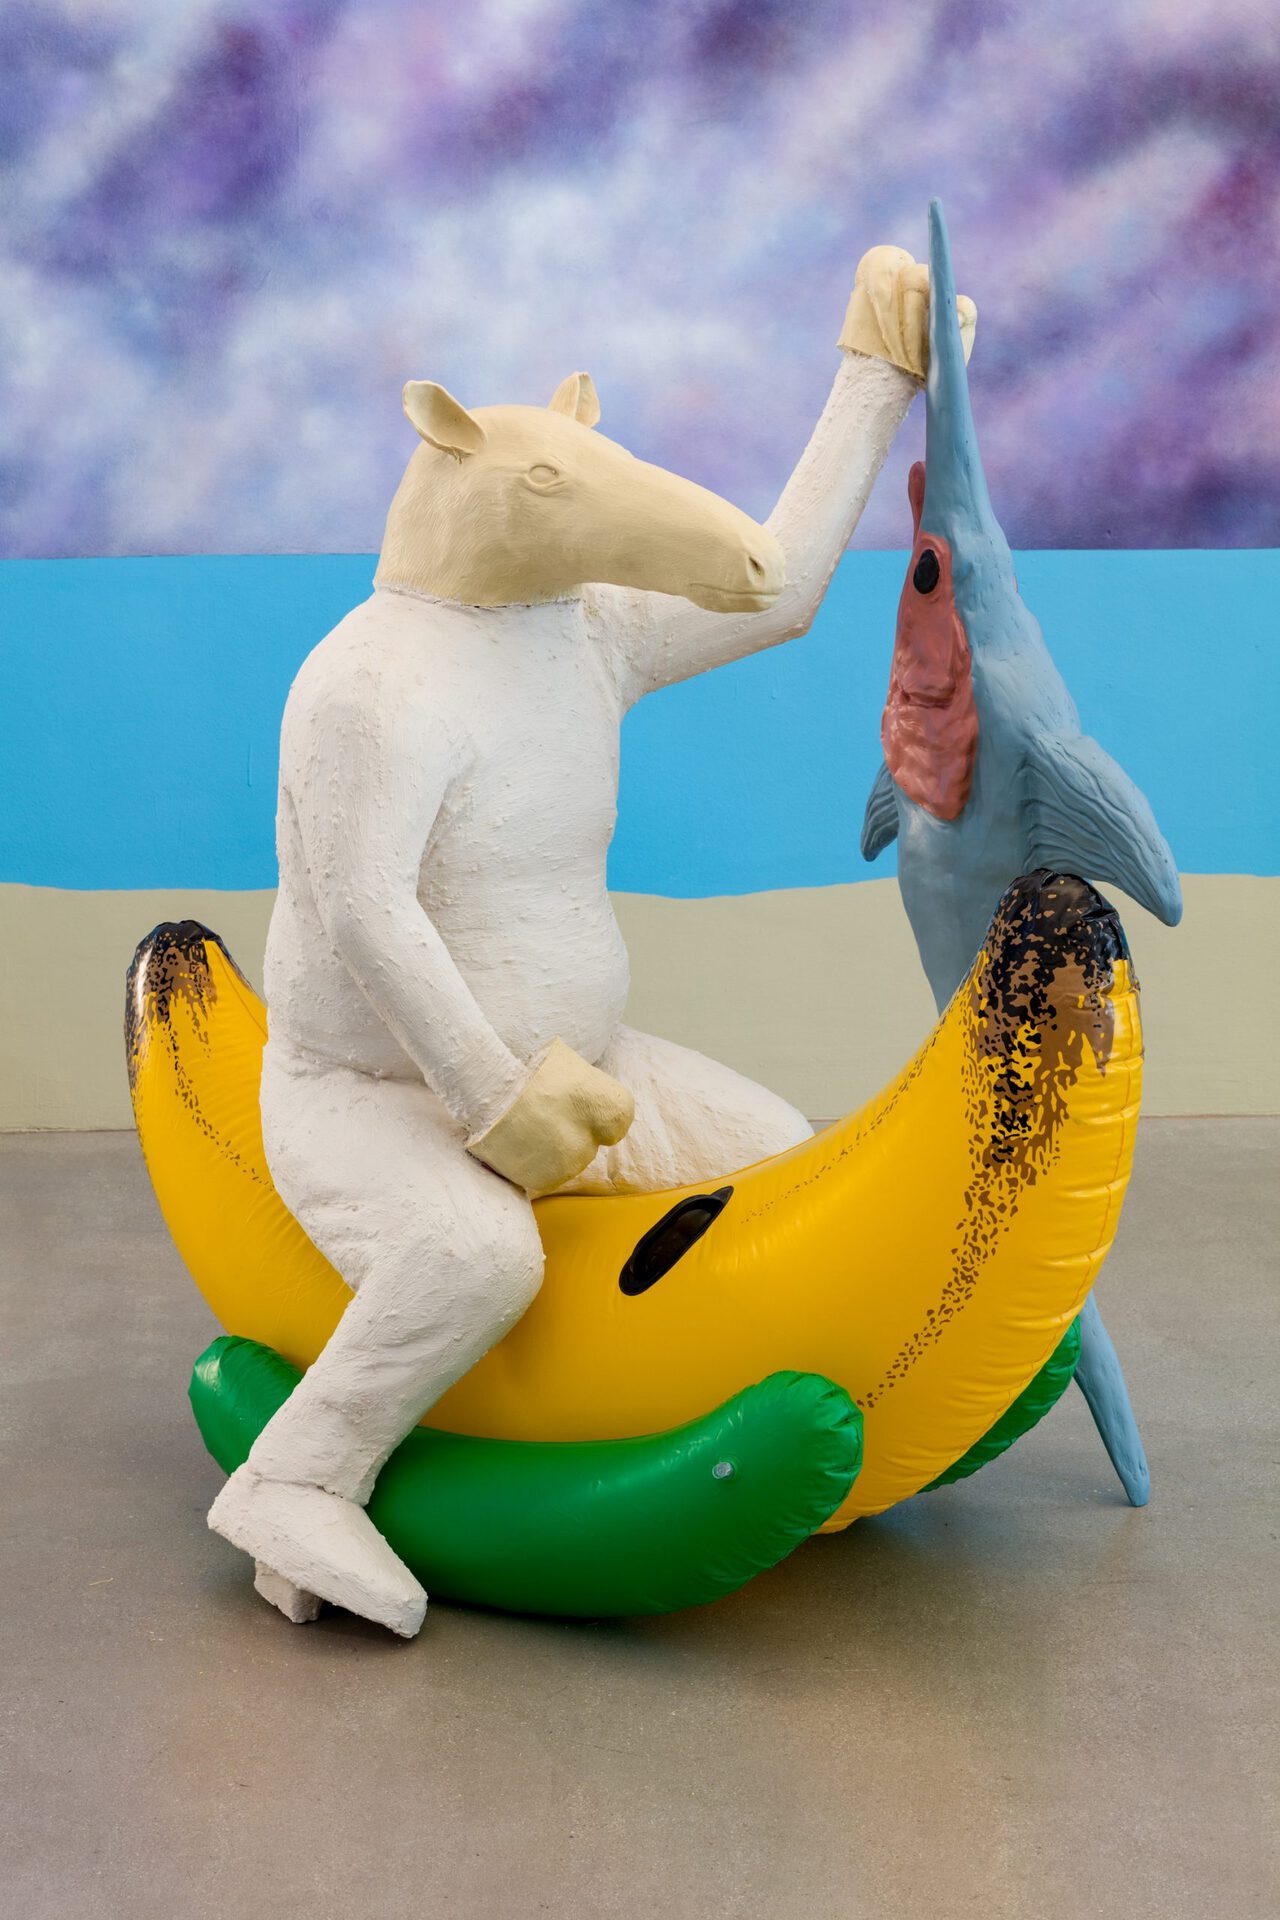 Gabriele Edlbauer, Lonesome Rider, 2019, polyurethane resin, acrylic resin, foam, wood, inflatable banana, spray paint